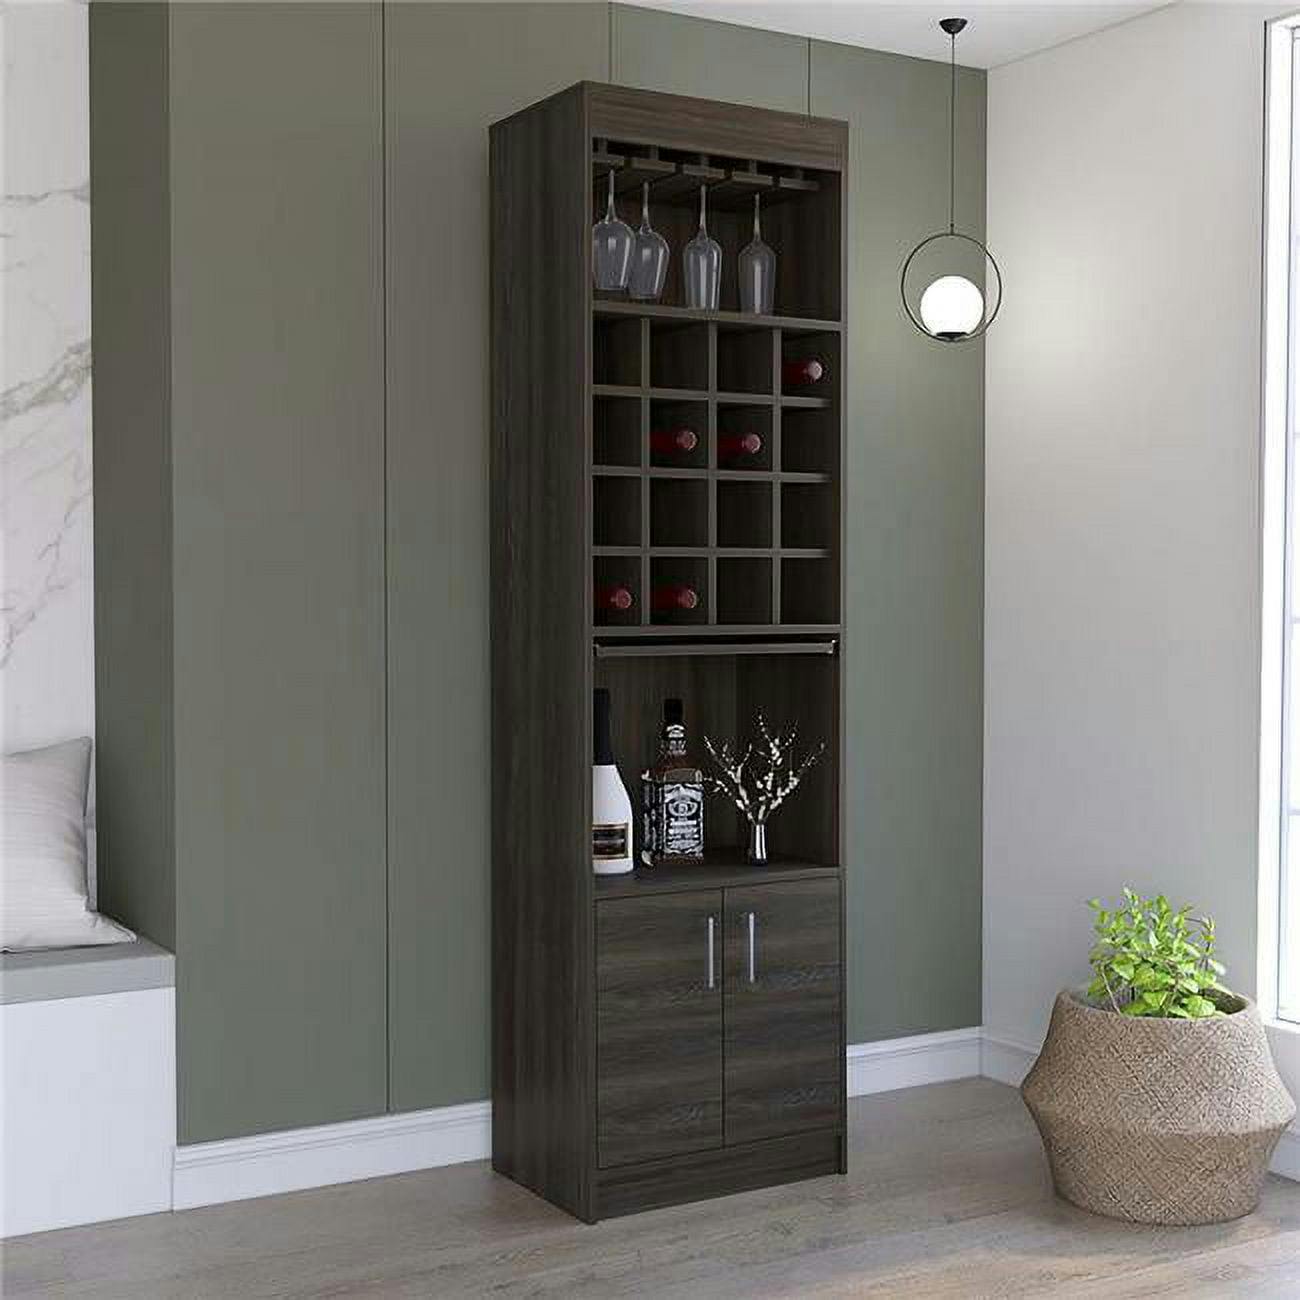 Carbon Espresso Modern Bar Cabinet with Extendable Serving Shelf